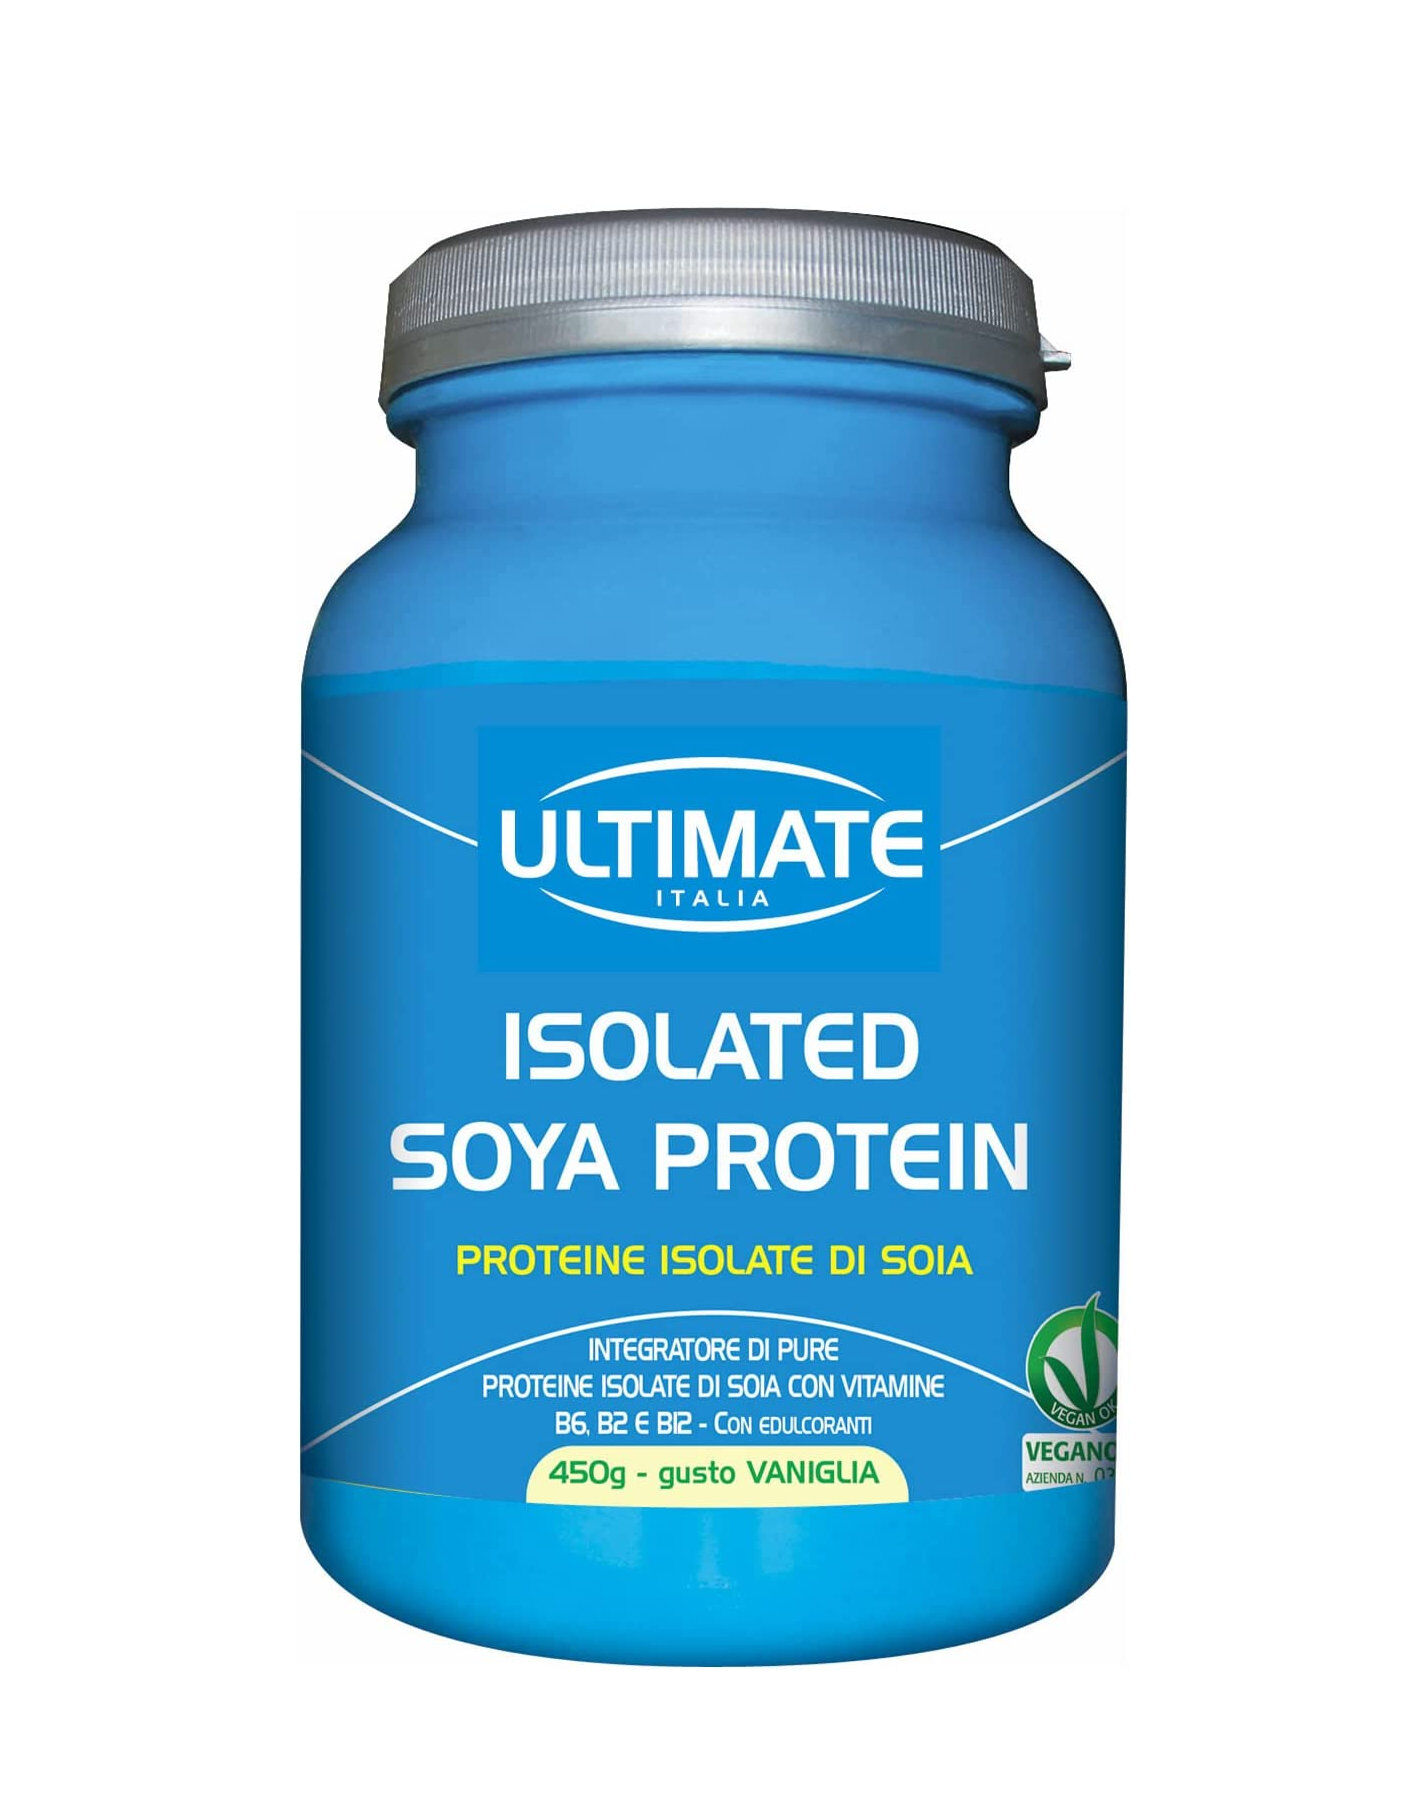 ULTIMATE ITALIA Isolated Soya Protein 450 Grammi Vaniglia